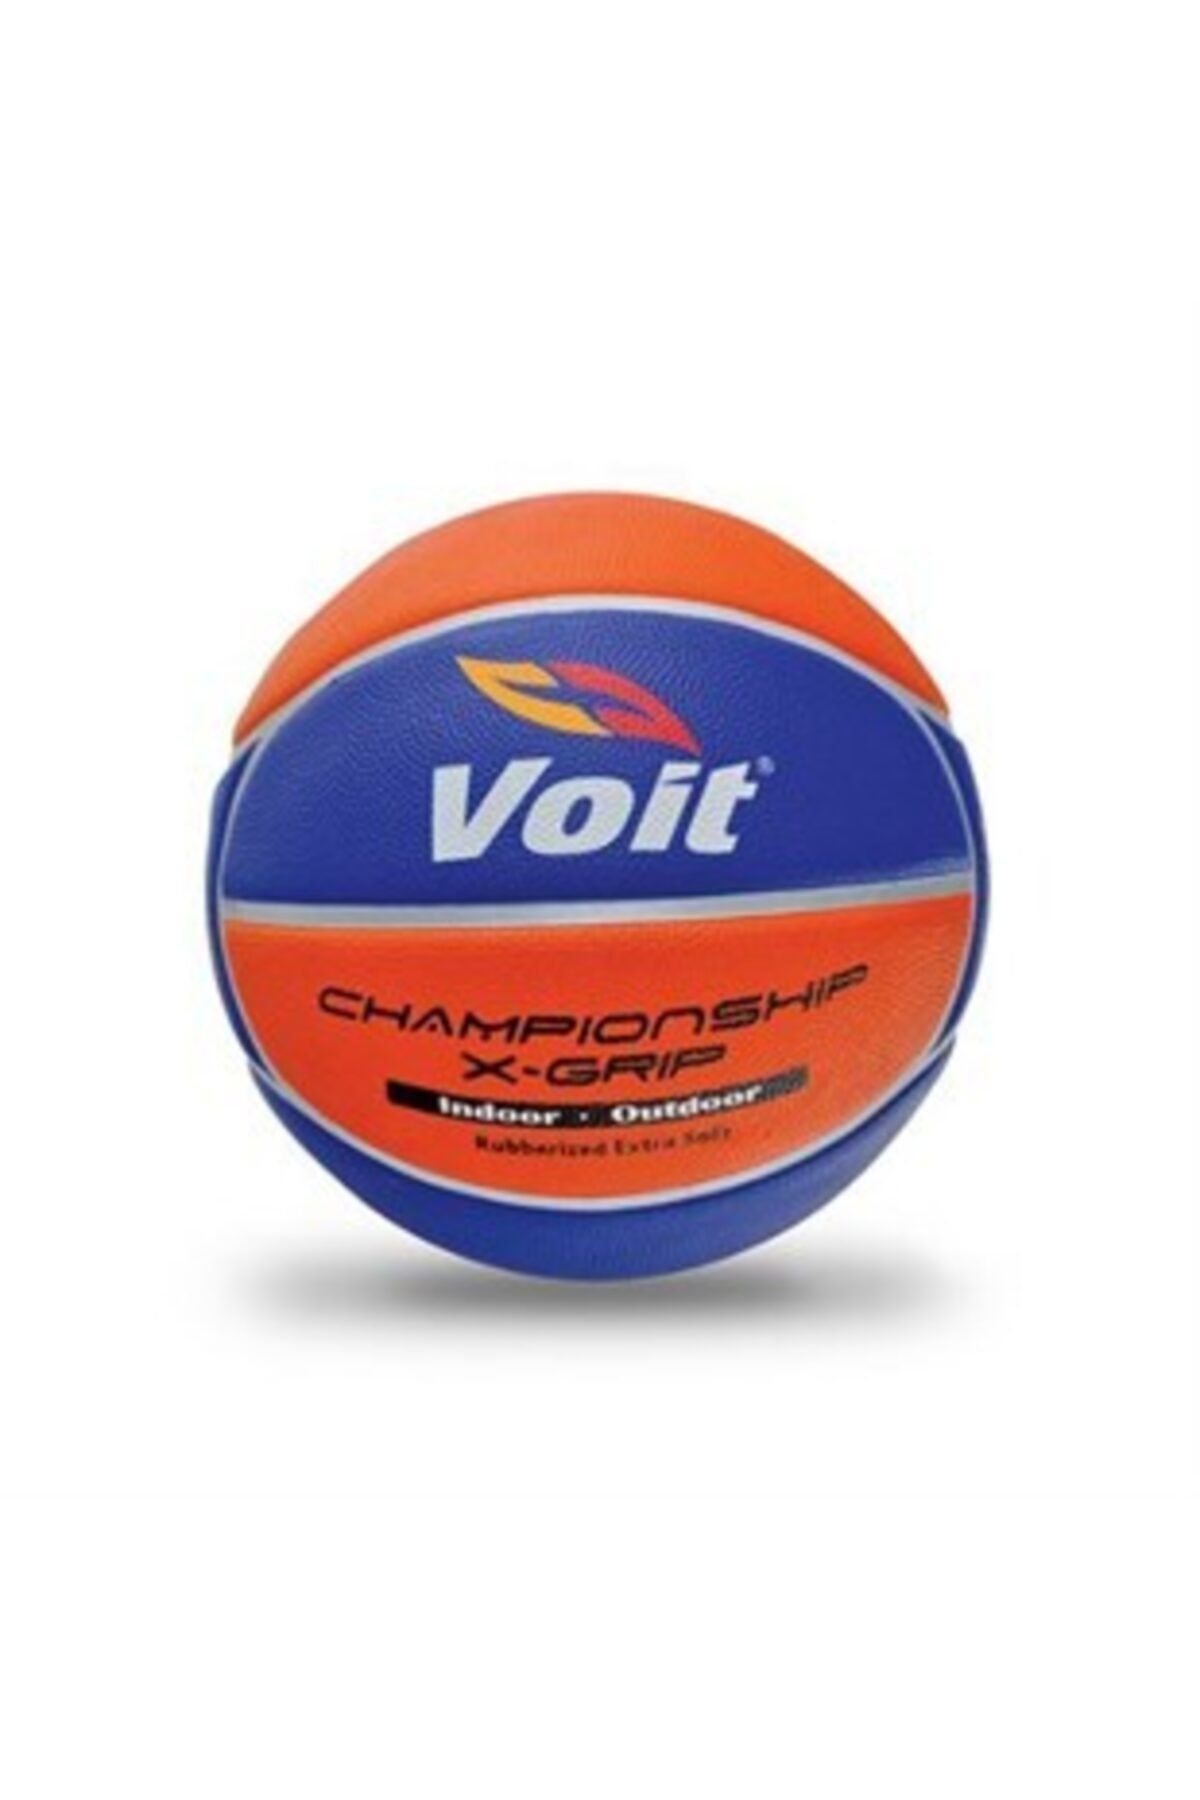 Voit Xgrip Basketbol Topu Turuncu Lacivert No: 7